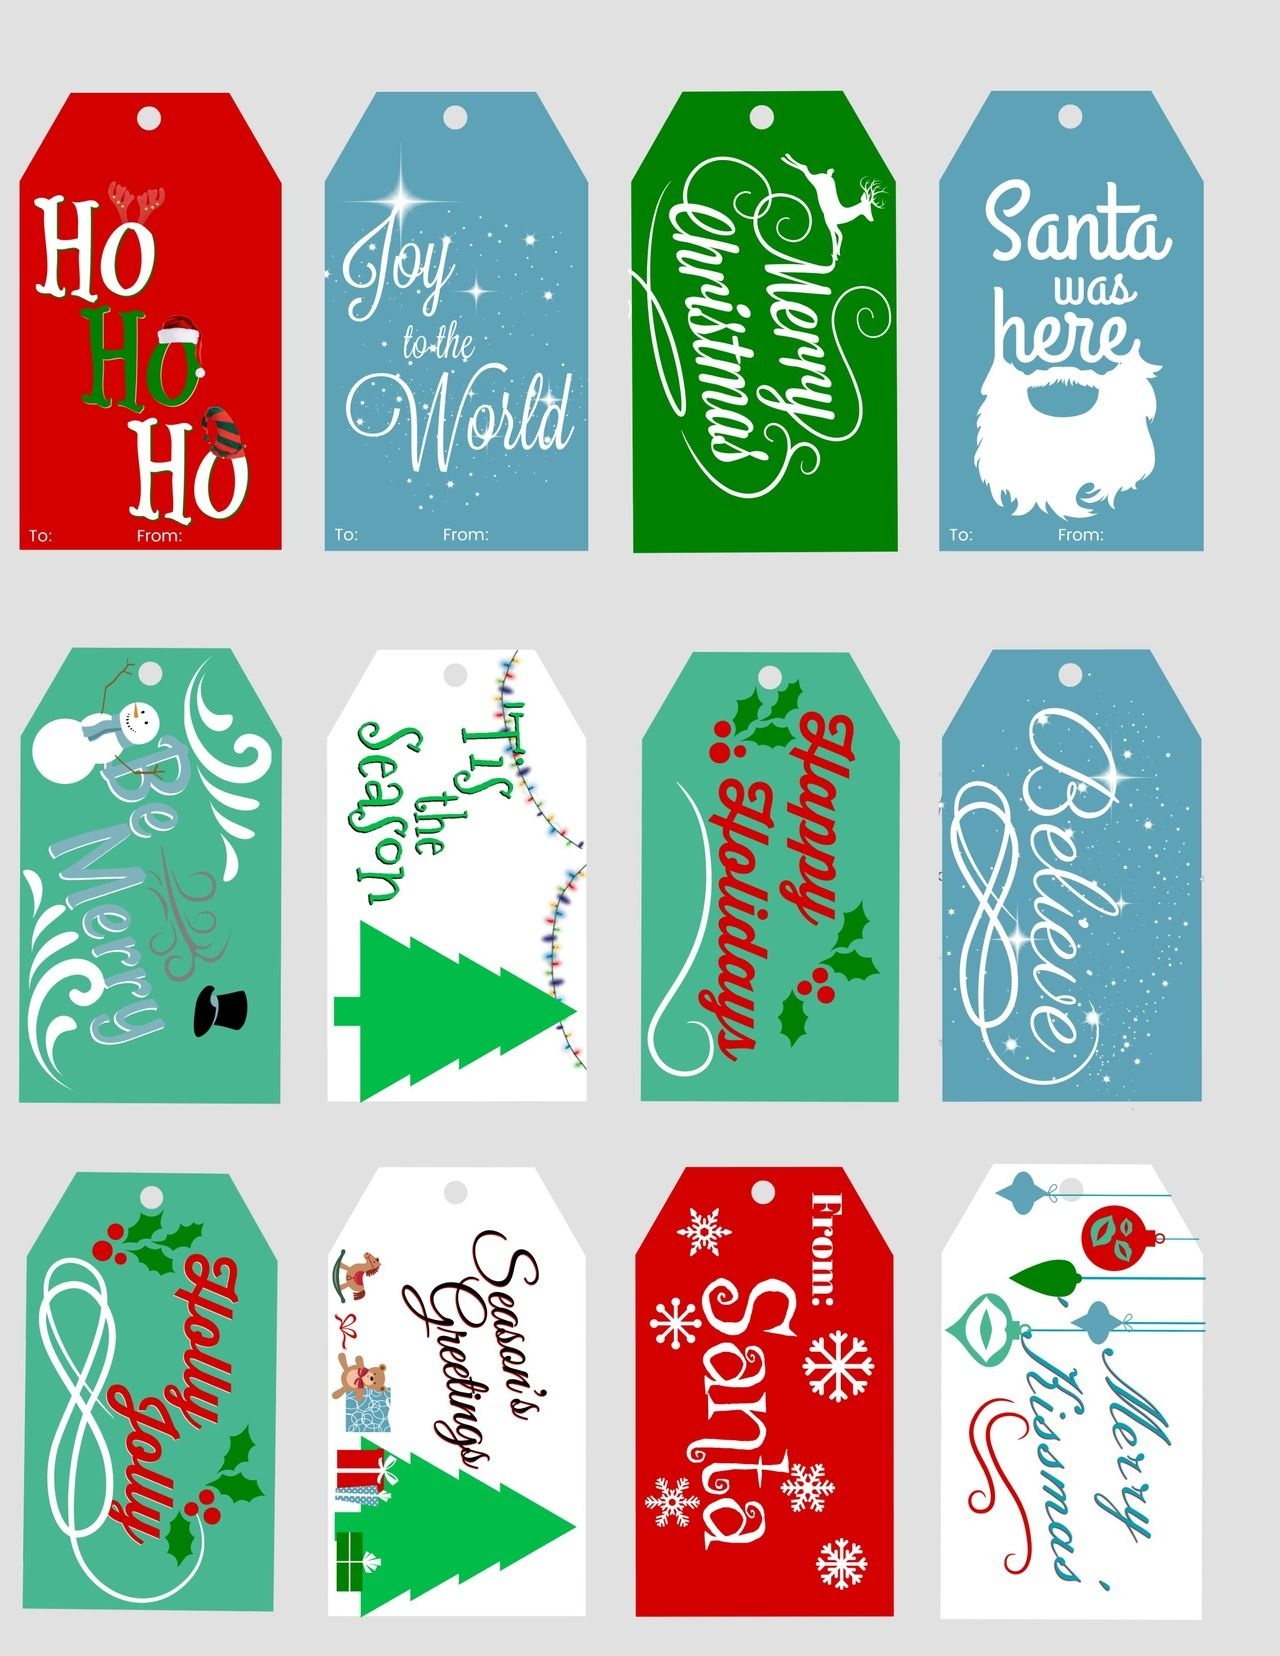 Free Printable Stickers For Christmas, Teachers, Planning, And More - Free Printable Stickers For Teachers